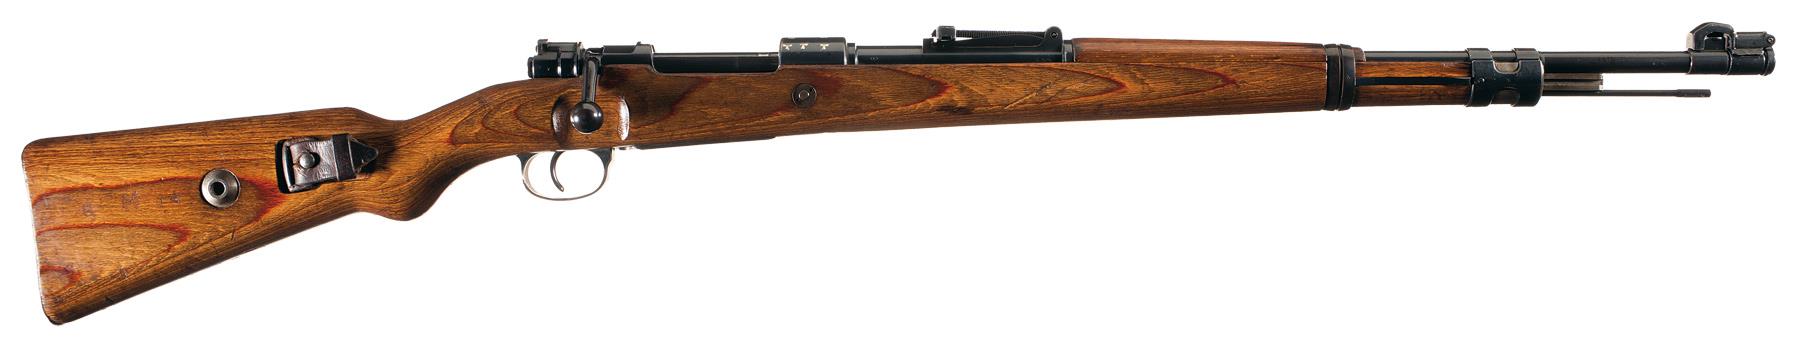 Mauser 98k Rifle 8 Mm Mauser Rock Island Auction 8589